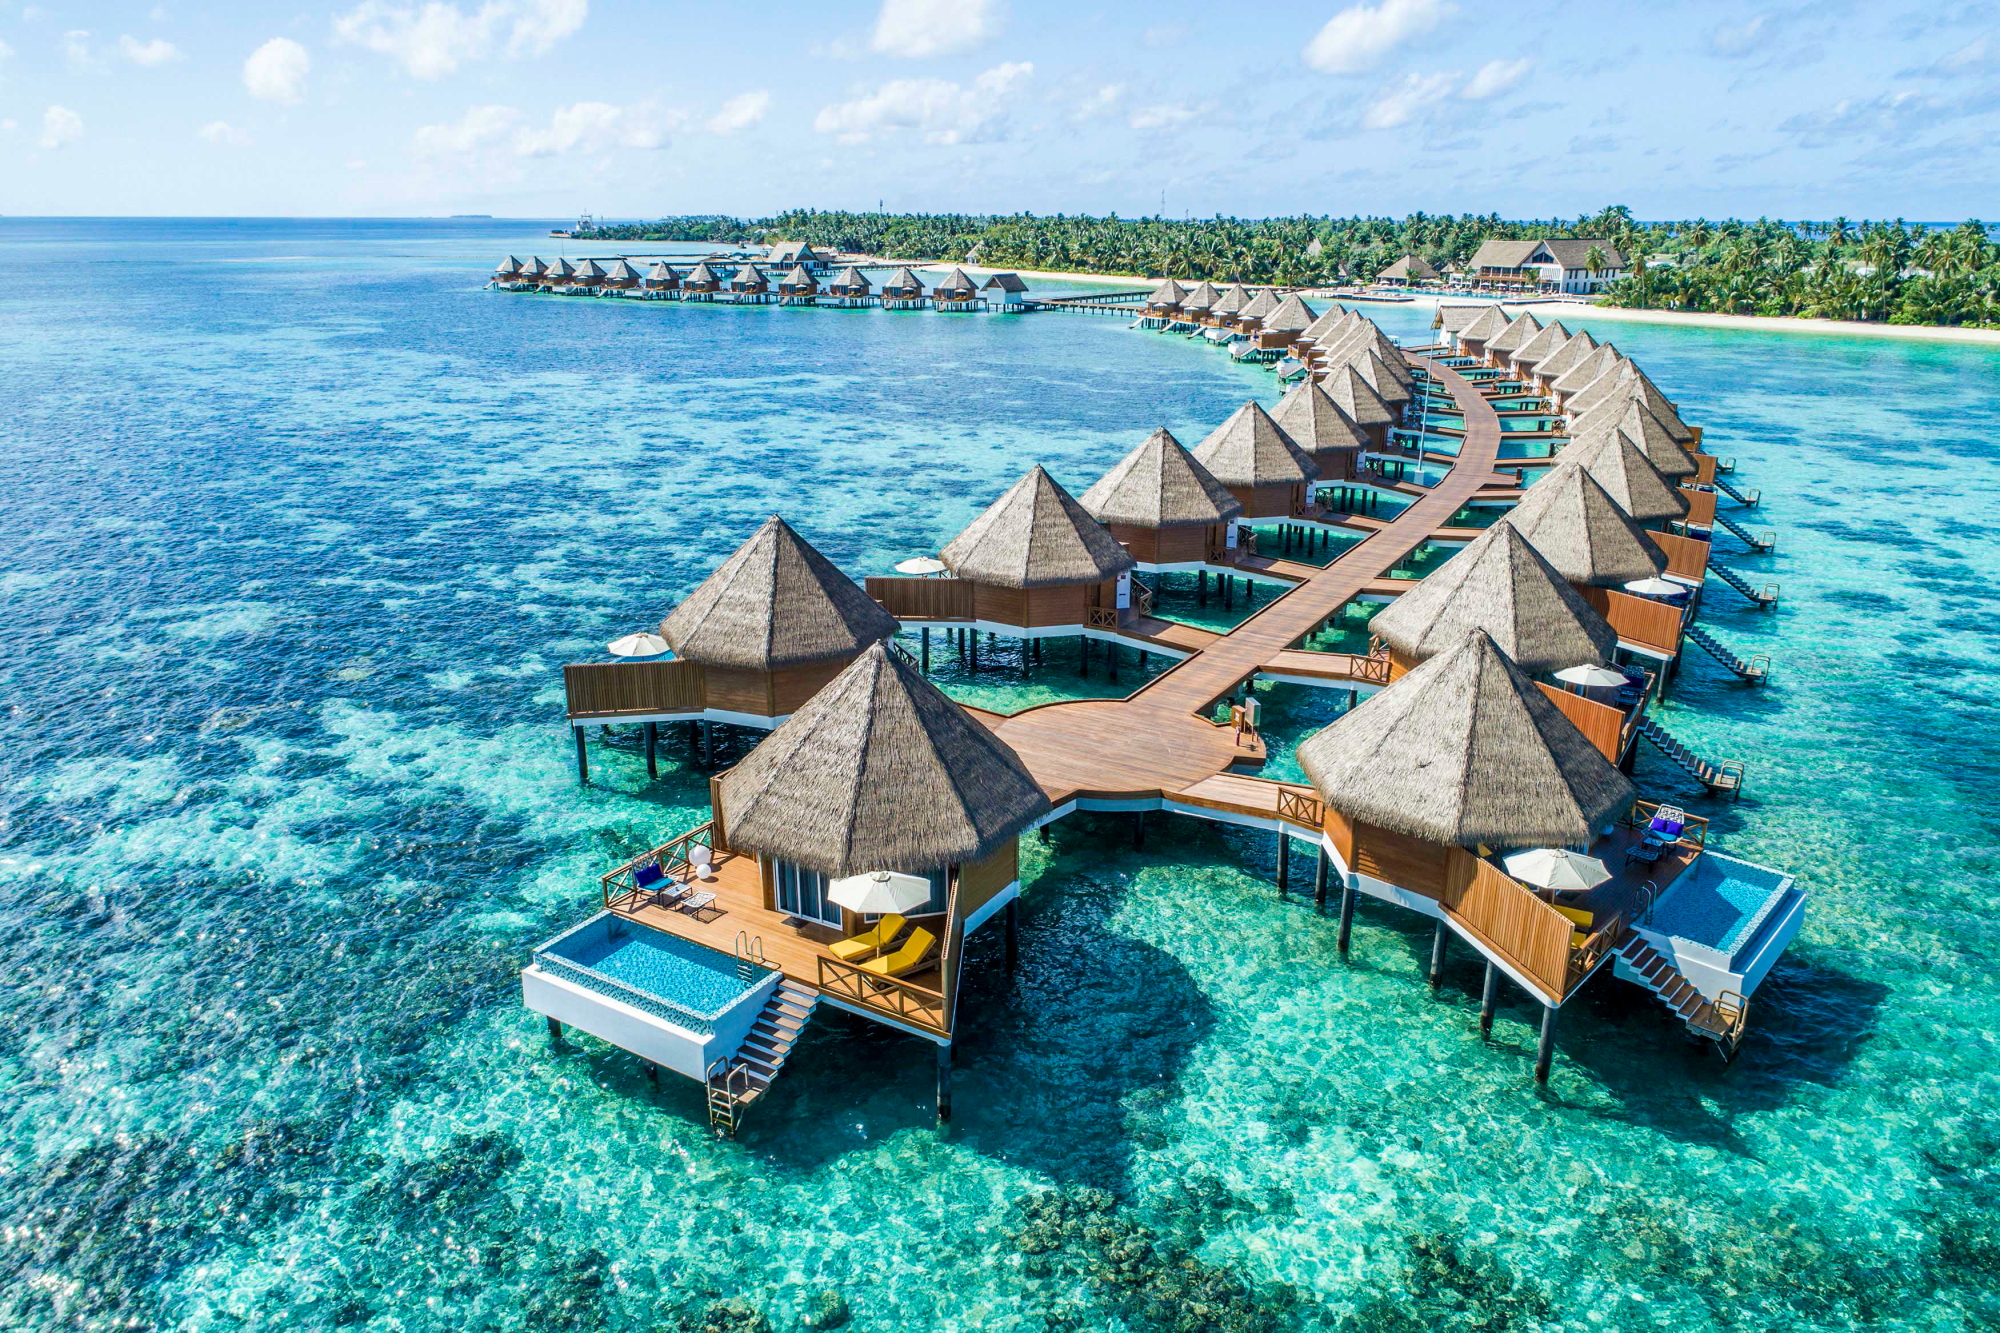 Mercure Maldives Kooddoo has 68 villas comprising of 43 Over Water Villas and 25 Beach Villas. Twenty of the villas feature a private 3x6 meter swimming pool. Click to enlarge.